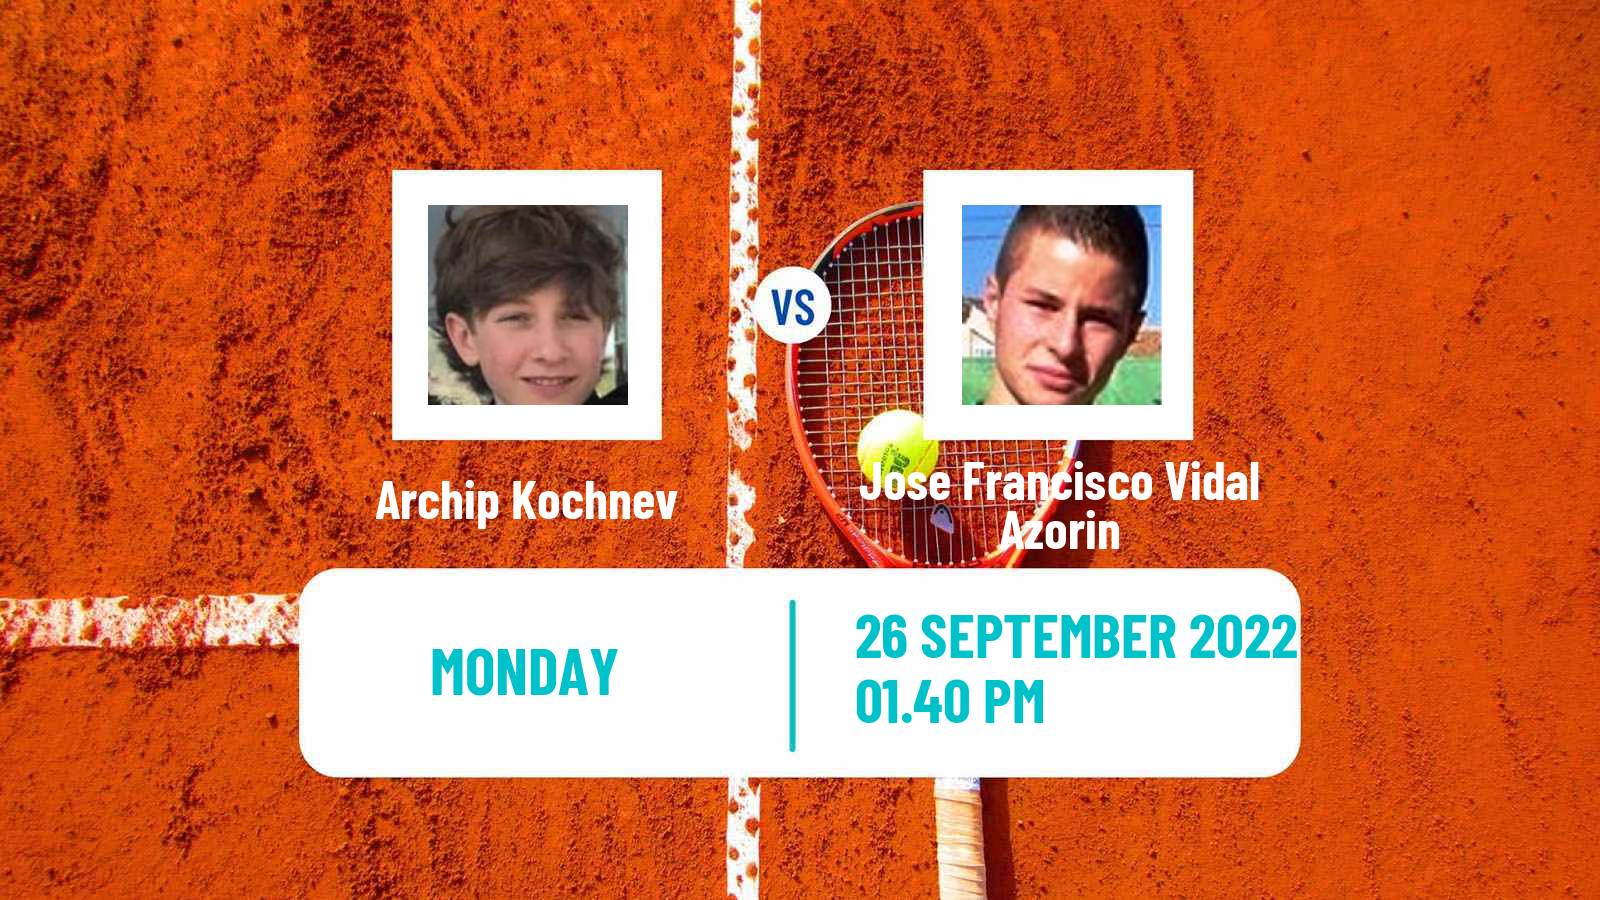 Tennis ITF Tournaments Archip Kochnev - Jose Francisco Vidal Azorin